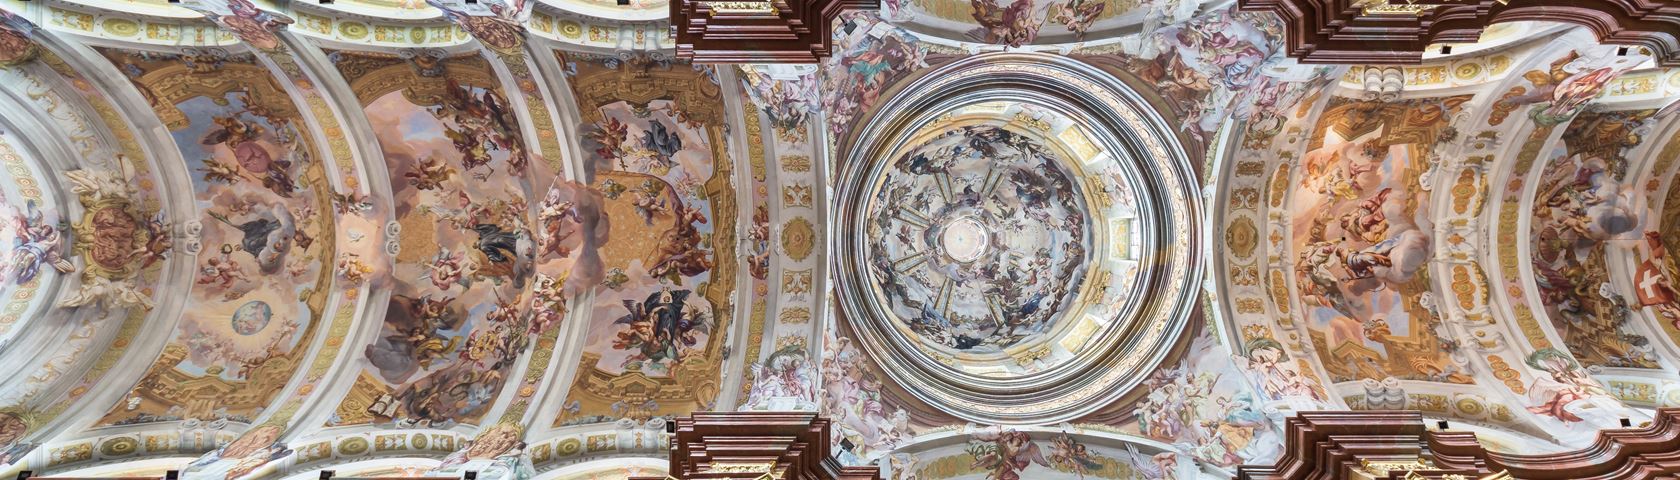 Melk Abbey Ceiling Frescos (Melk, Lower Austria, Austria)